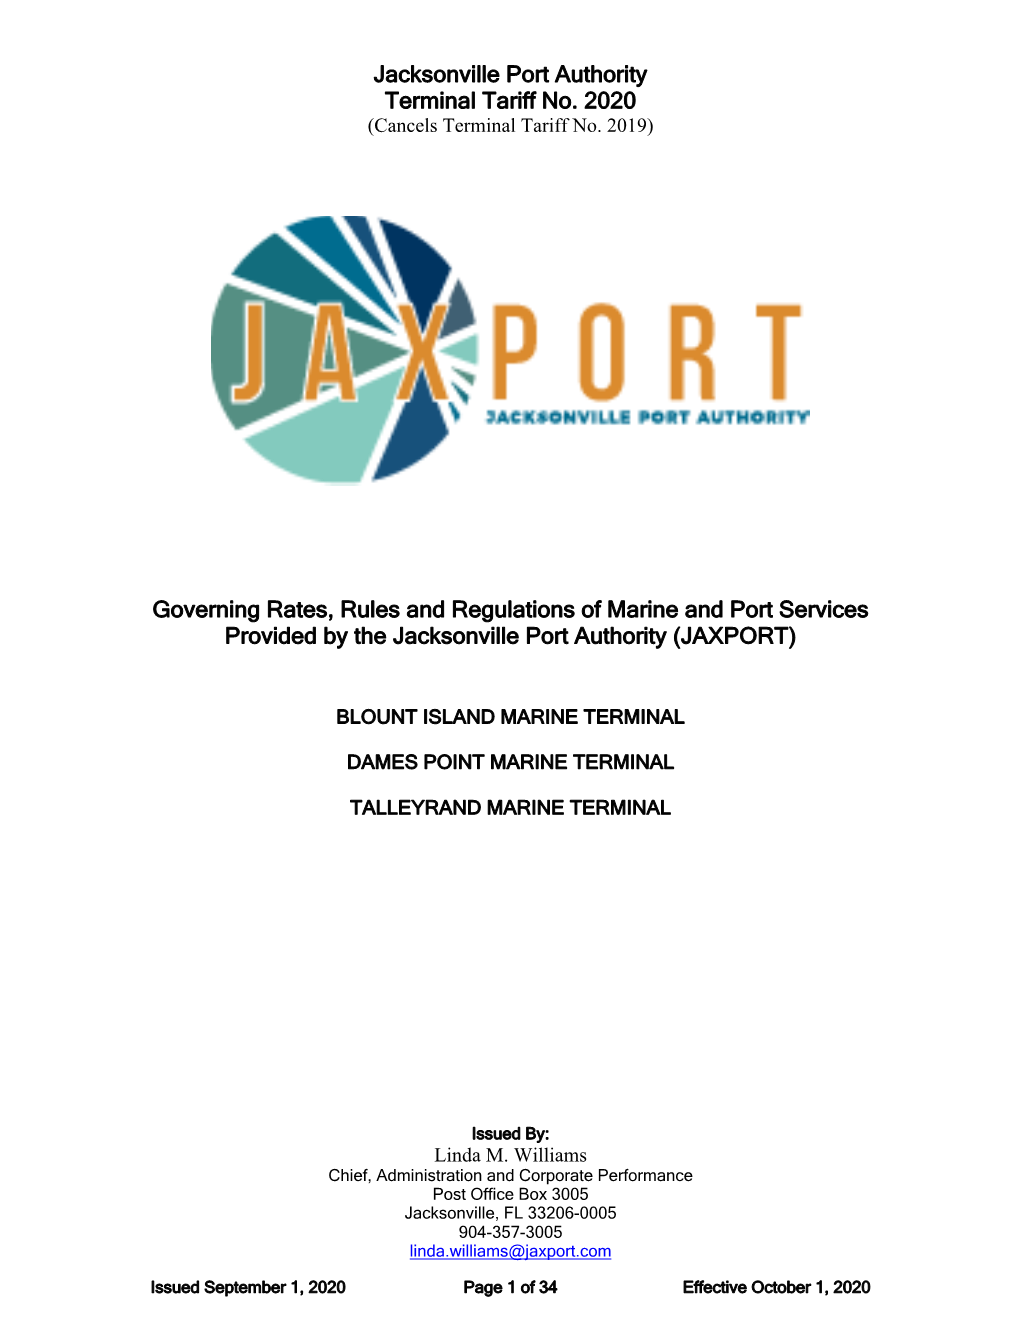 Jacksonville Port Authority Terminal Tariff No. 2020 Governing Rates